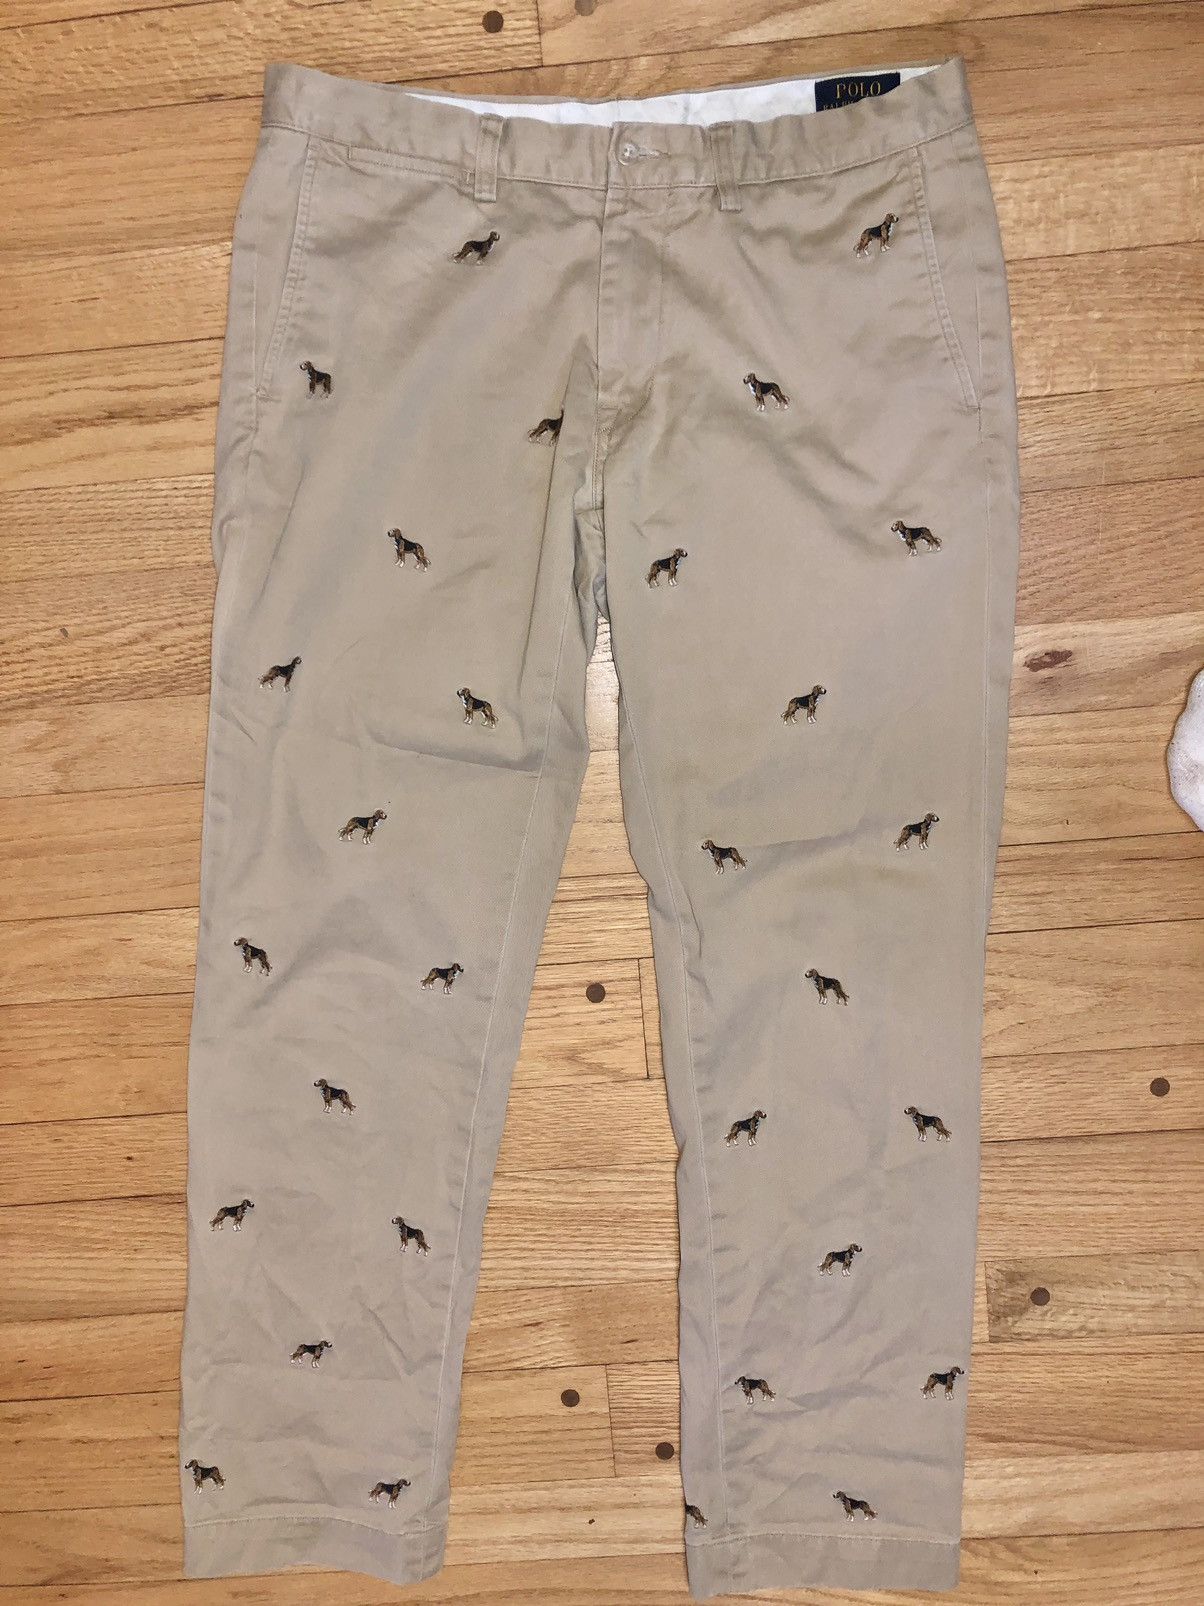 NWT Polo Ralph Lauren Printed Khaki Pant Size 30×32 $298.